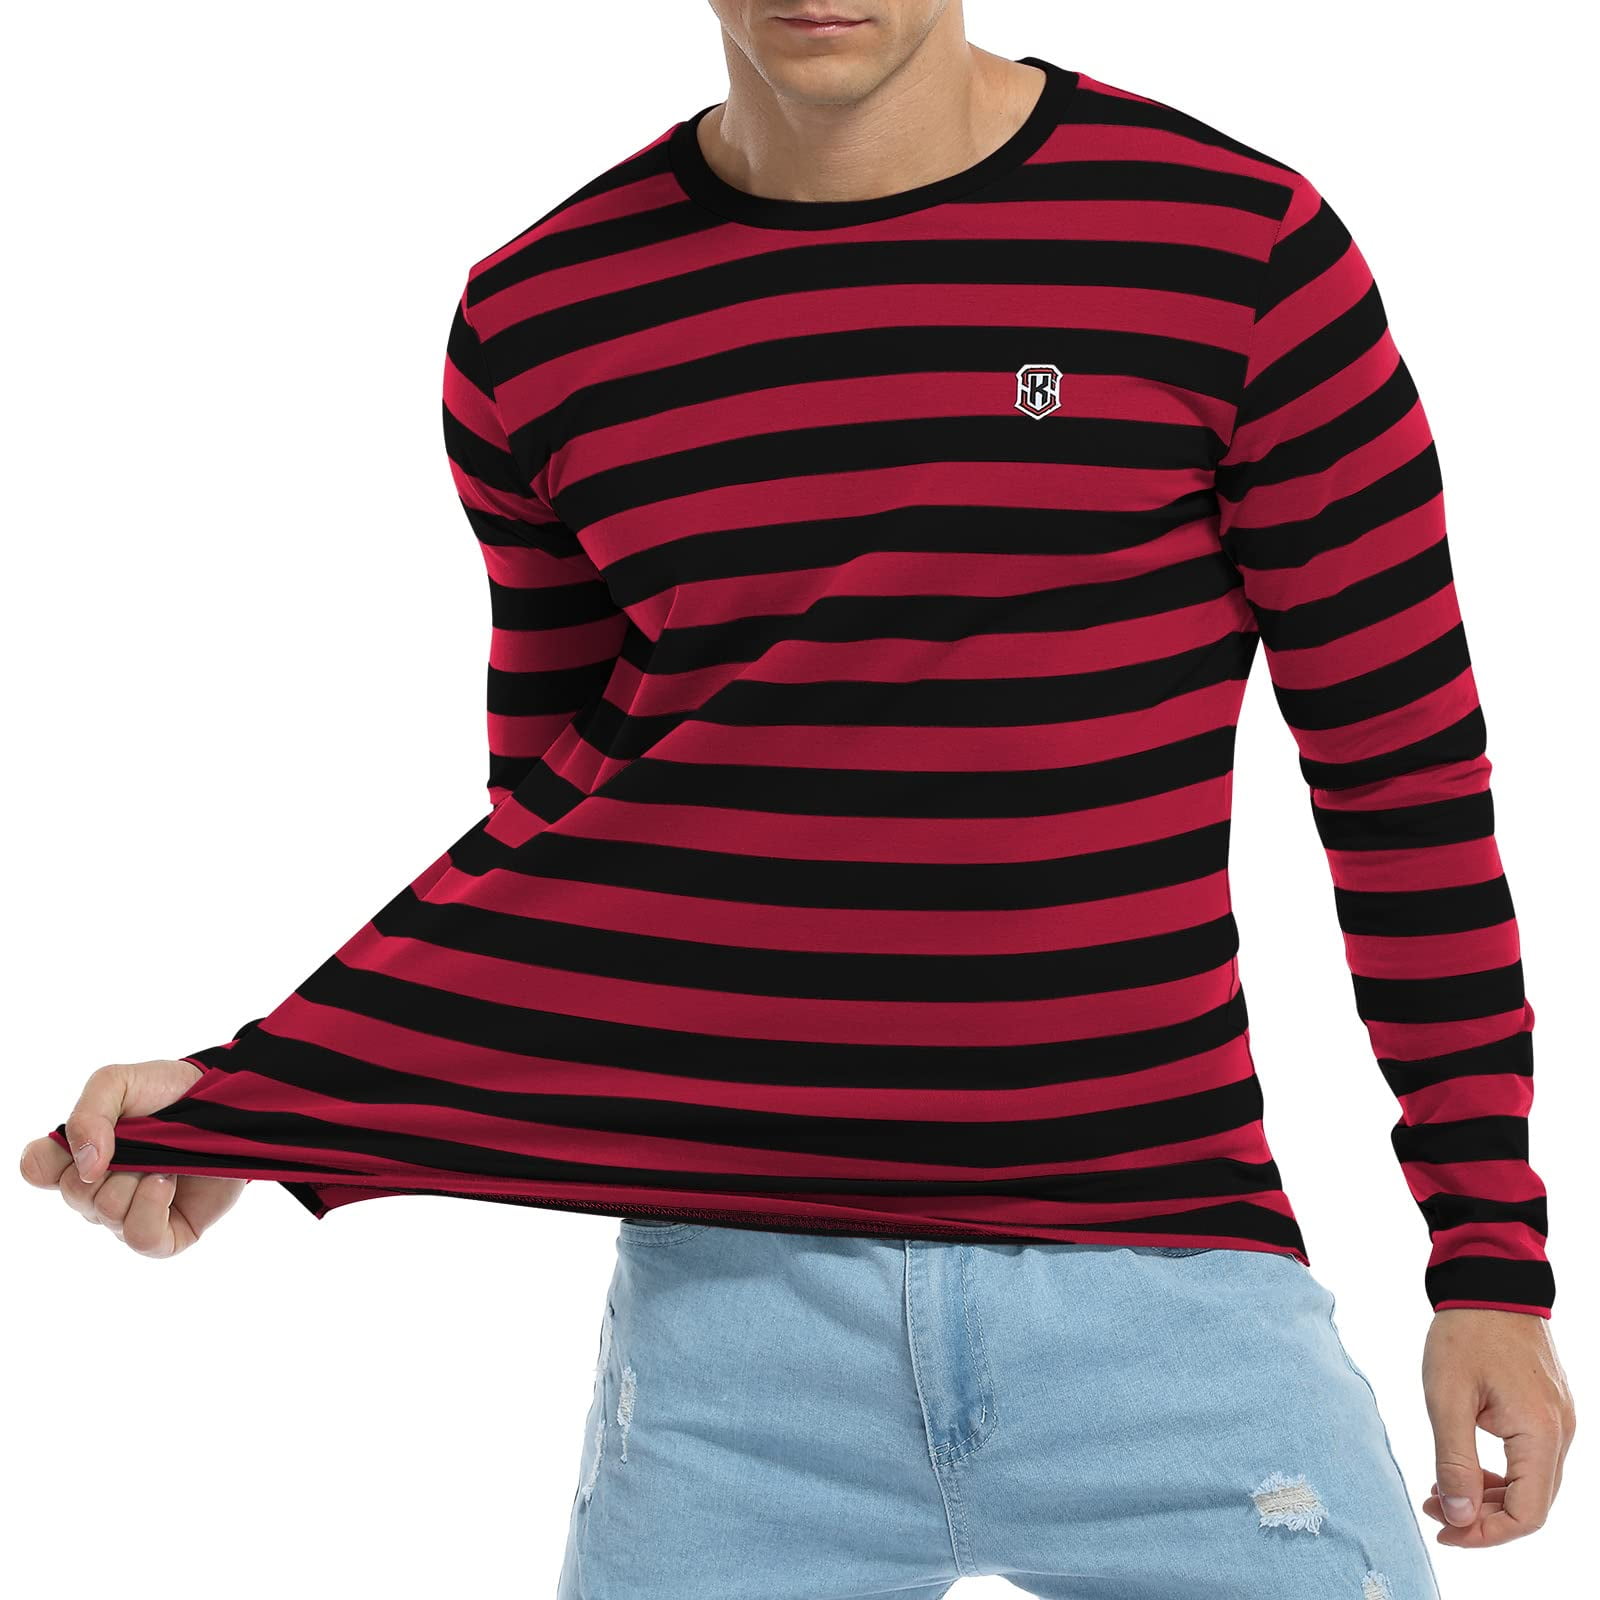 etc hardware svamp MLANM Men's Casual Cotton Striped Crewneck Long-Sleeve T-Shirt Basic  Pullover Tee Shirt, M Black Red - Walmart.com